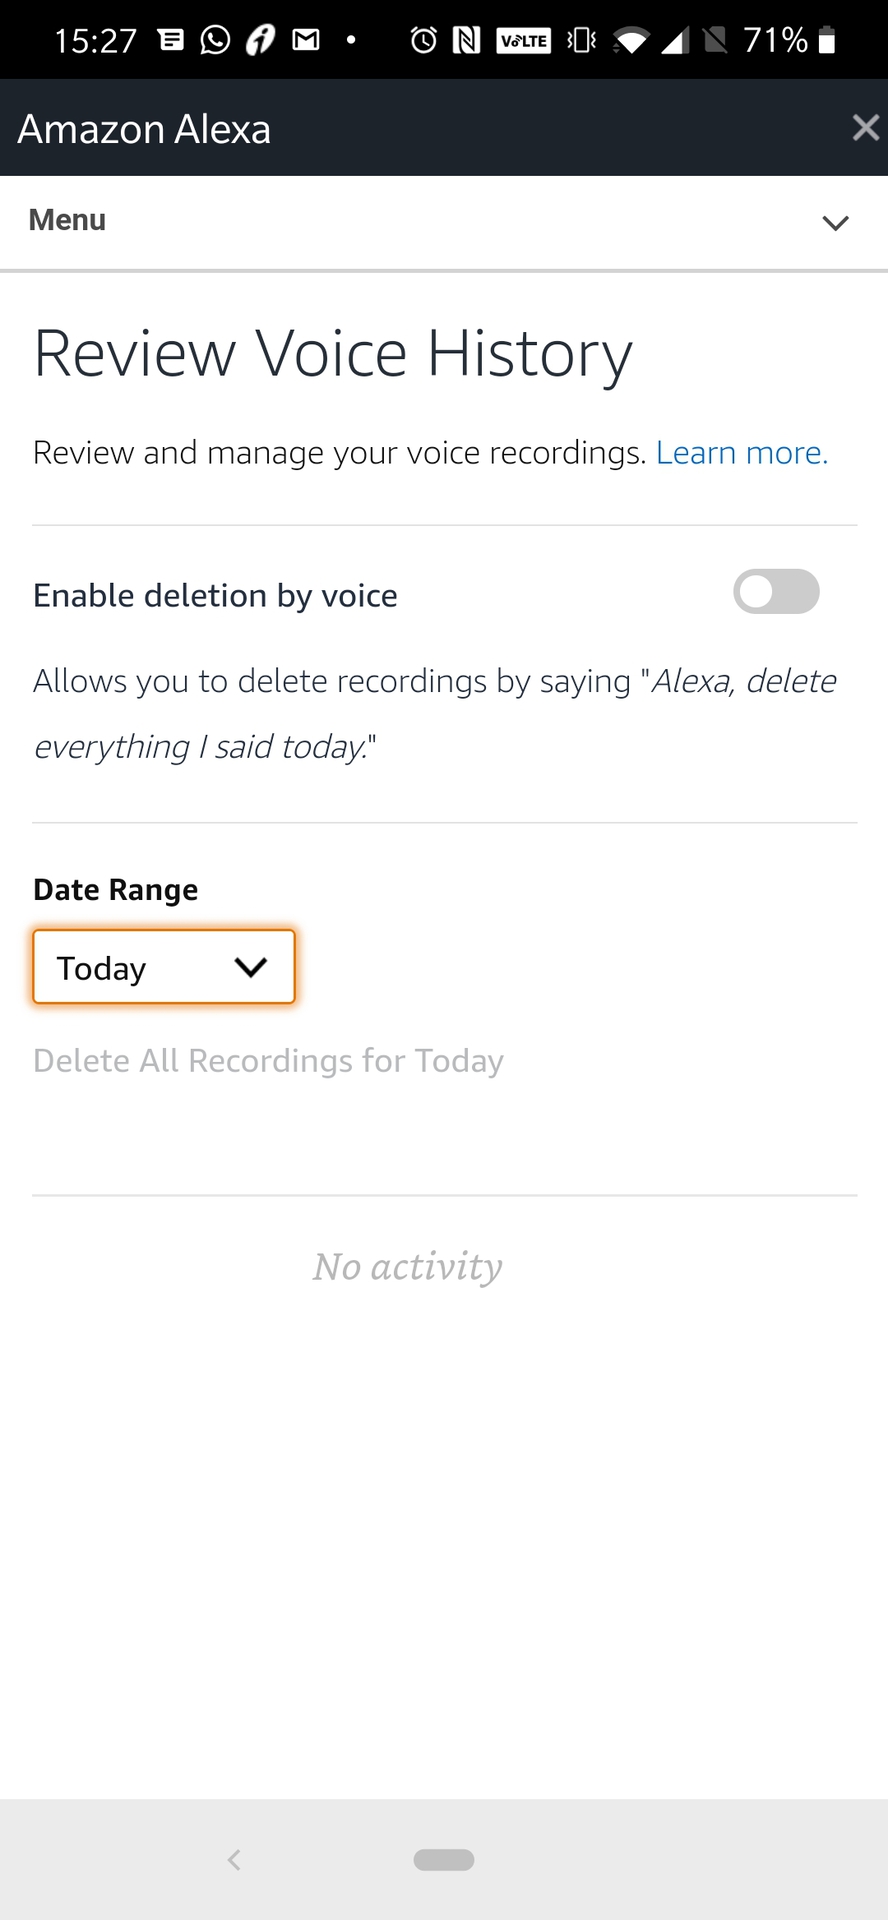 Amazon Alexa app - Review Voice History